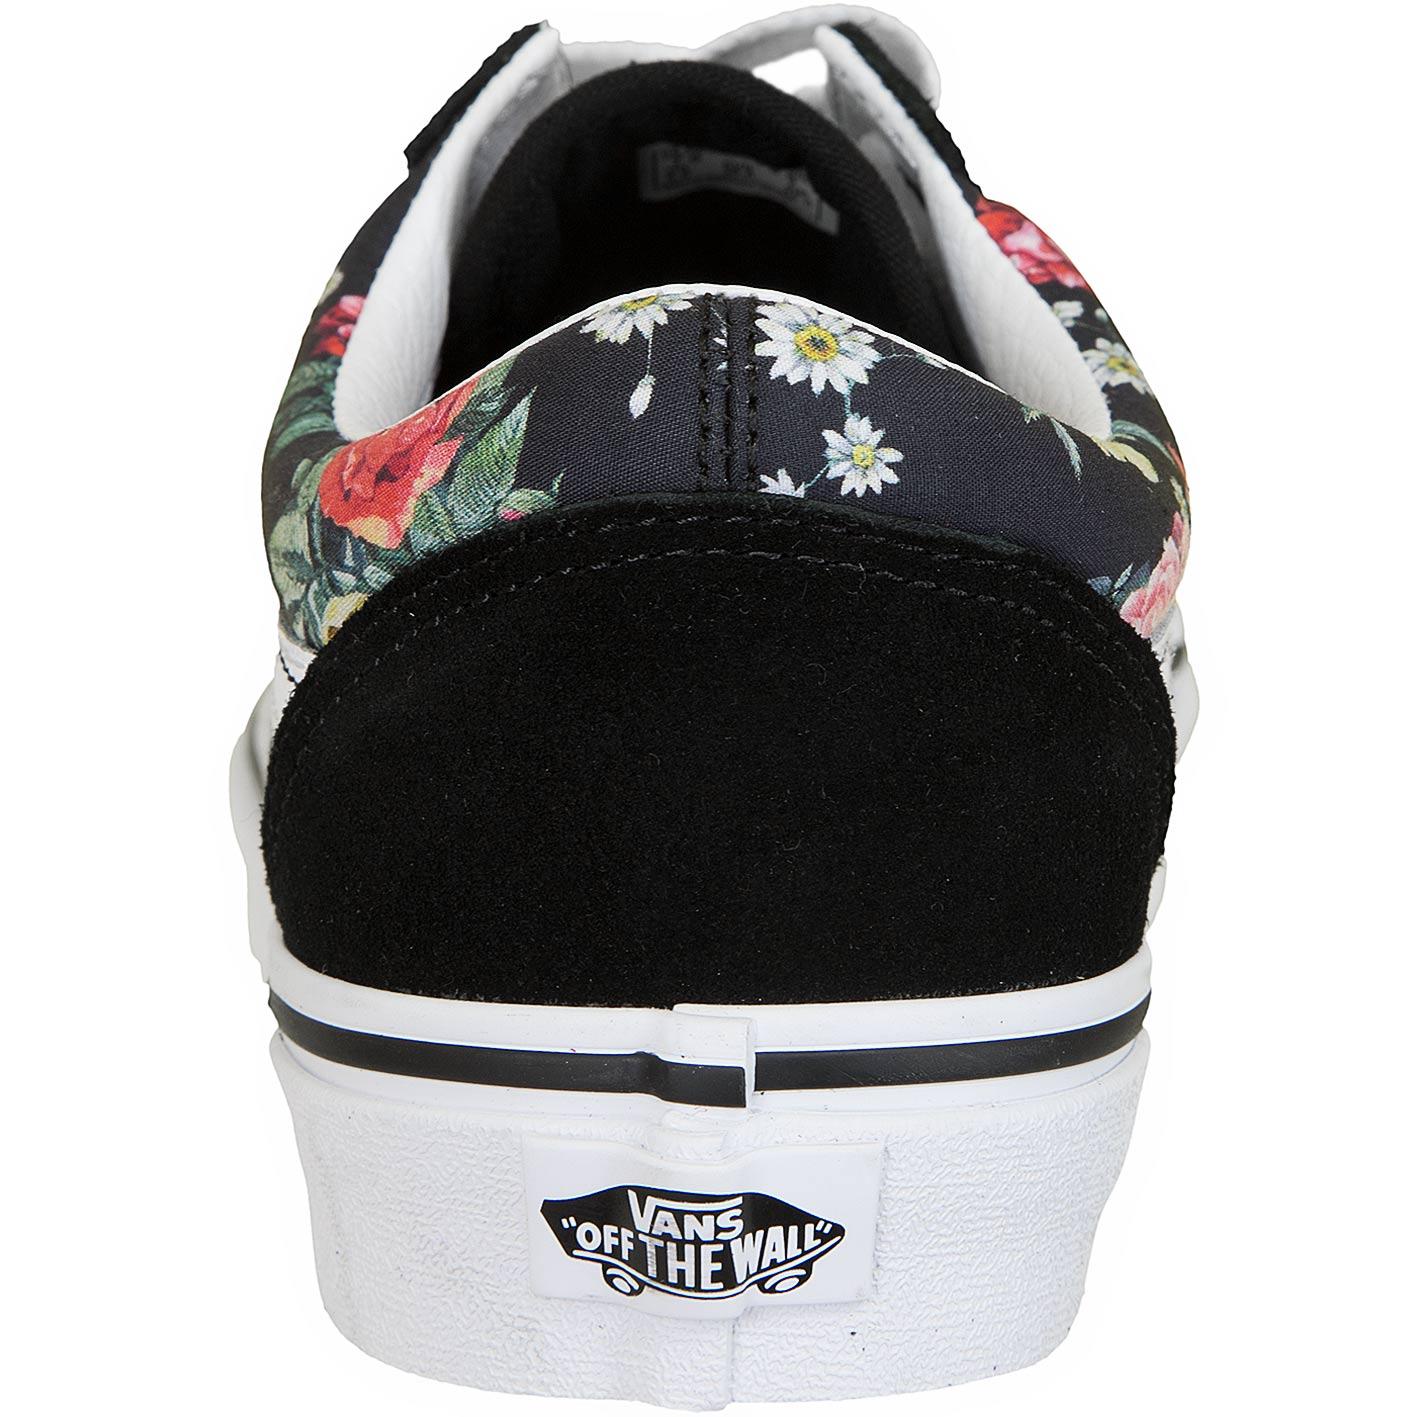 ☆ Vans Damen Sneaker Old Skool Garden Floral schwarz/weiß - hier bestellen!